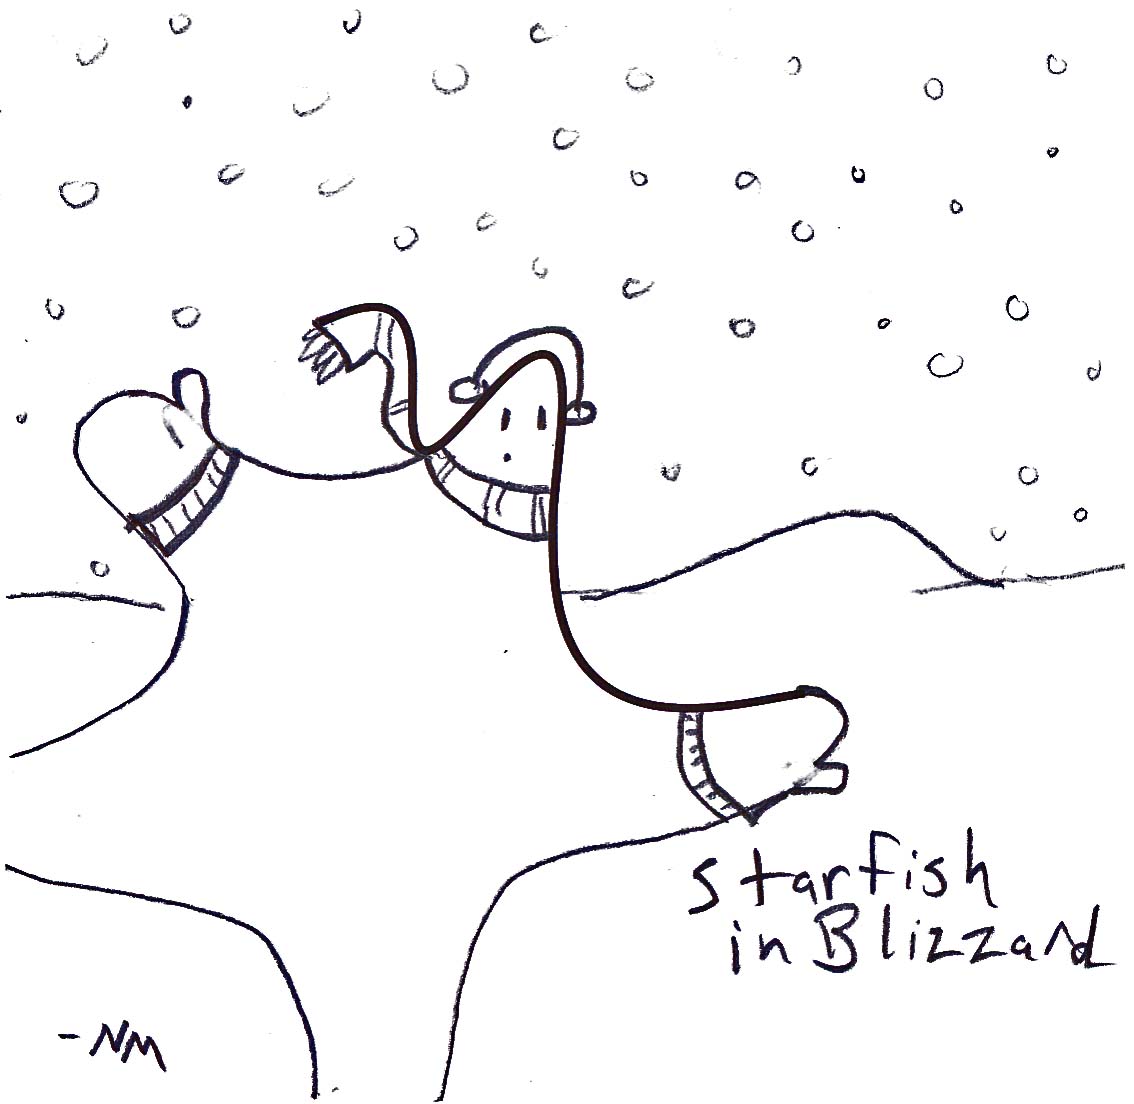 starfish in blizzard